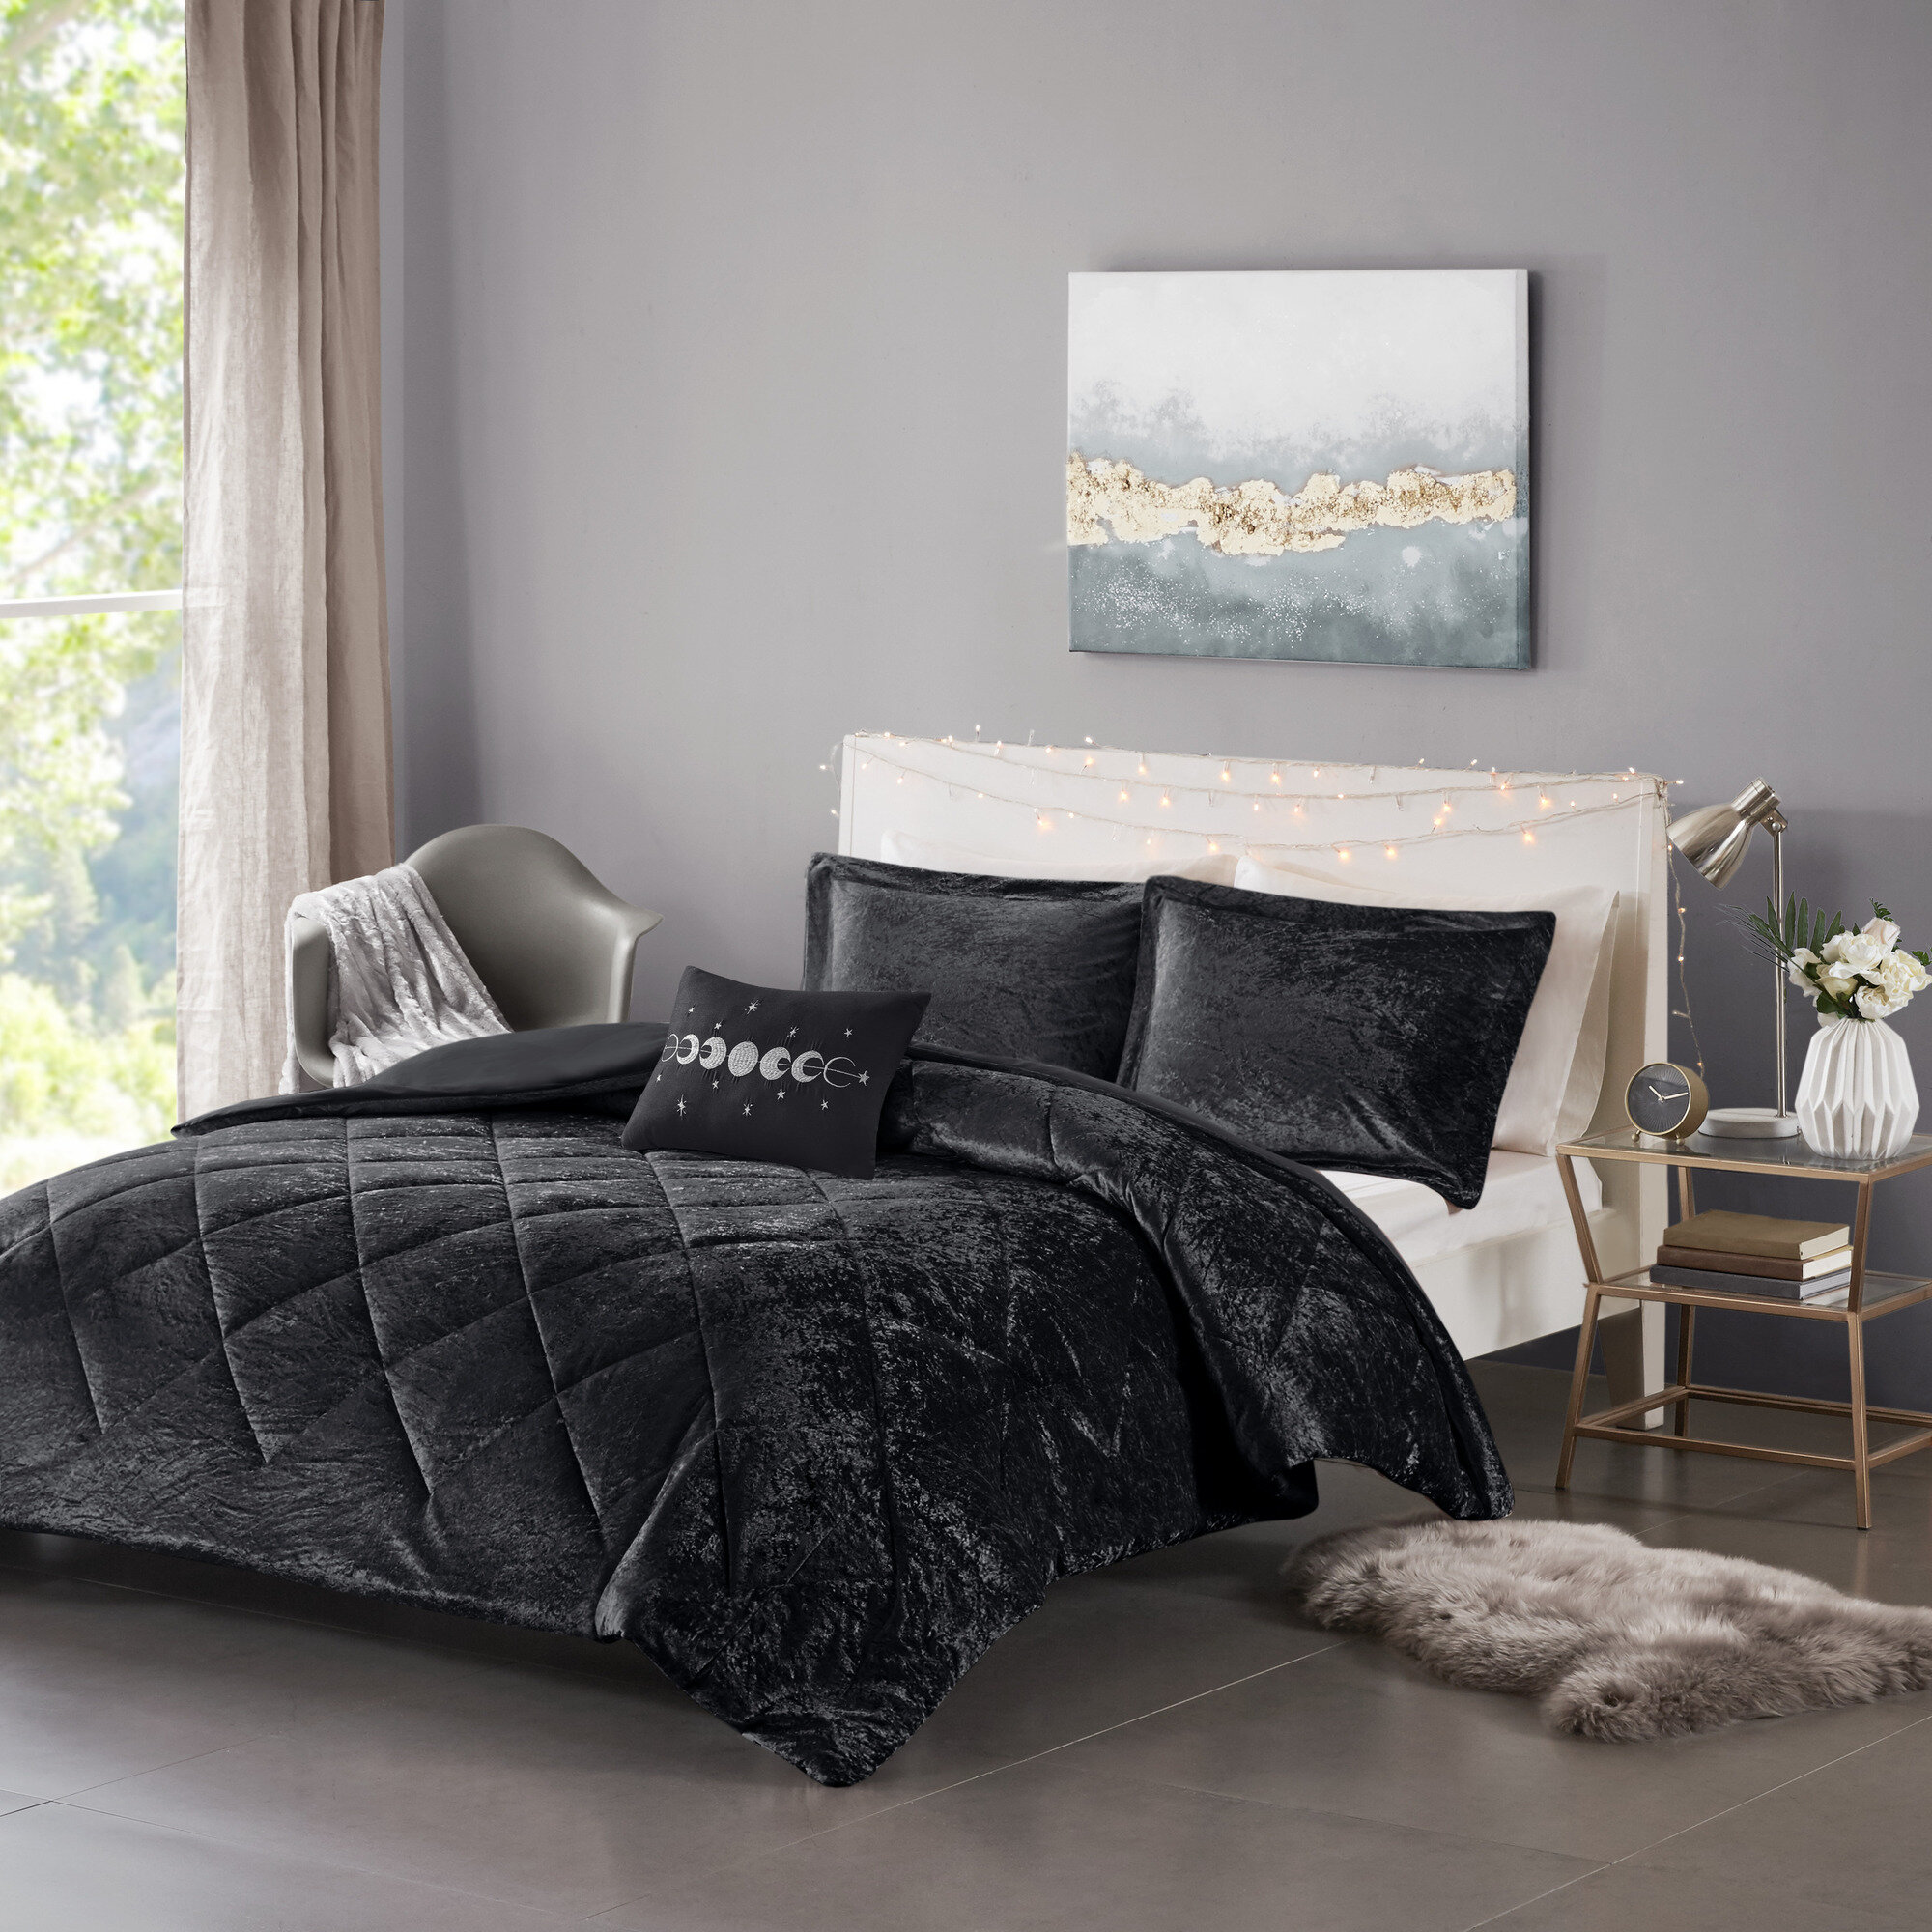 Modern Black Bedding Sets Allmodern